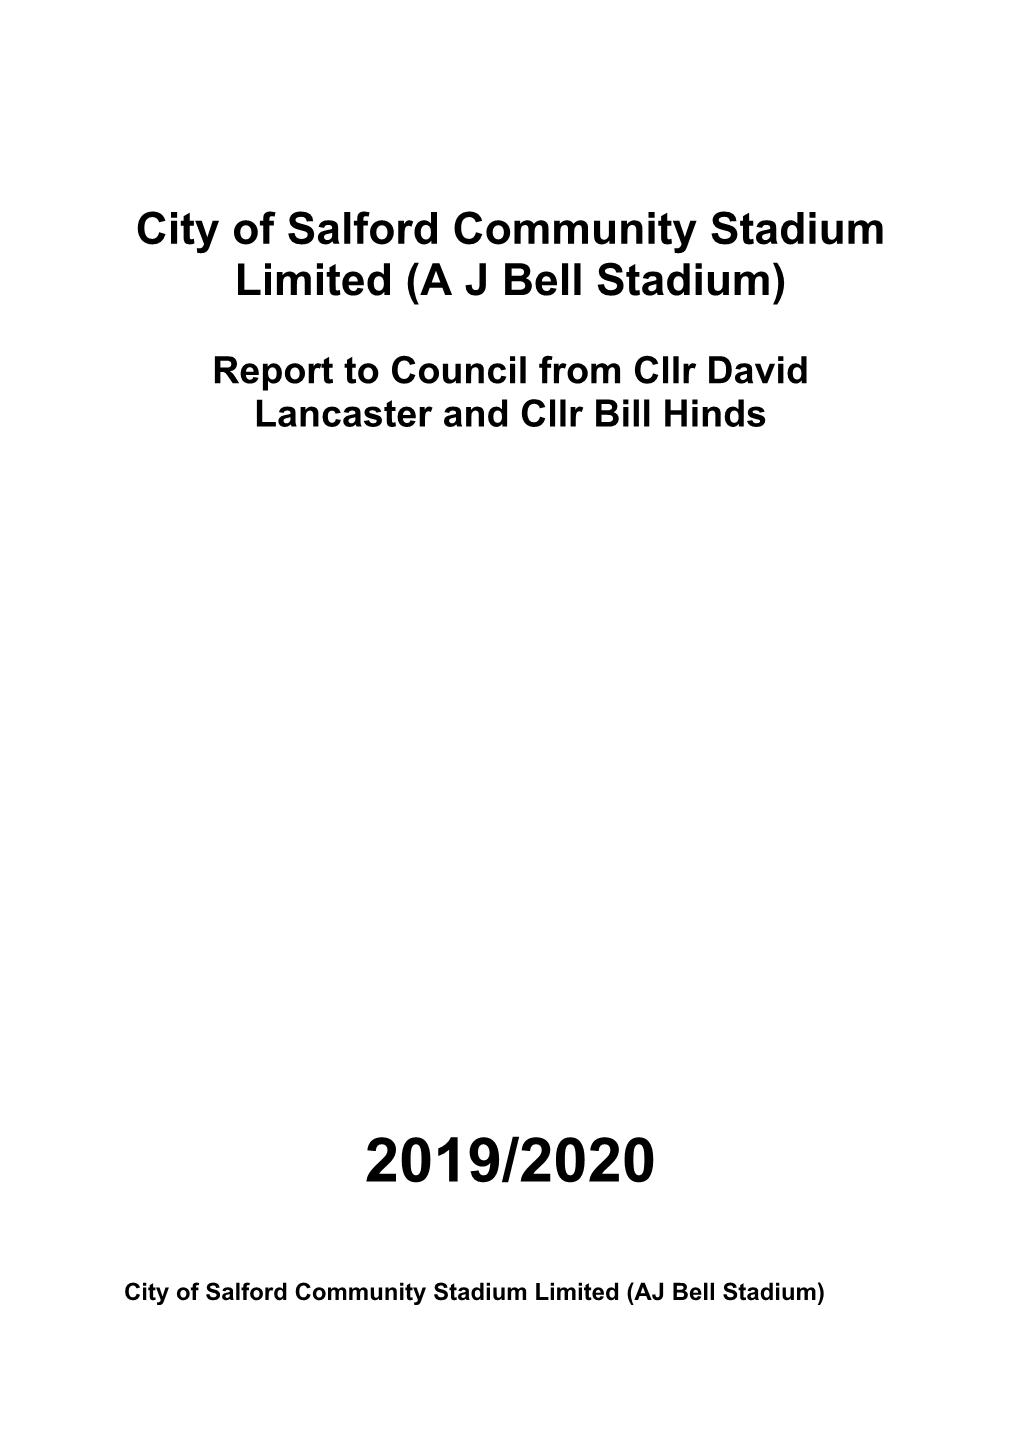 City of Salford Community Stadium Limited (A J Bell Stadium)